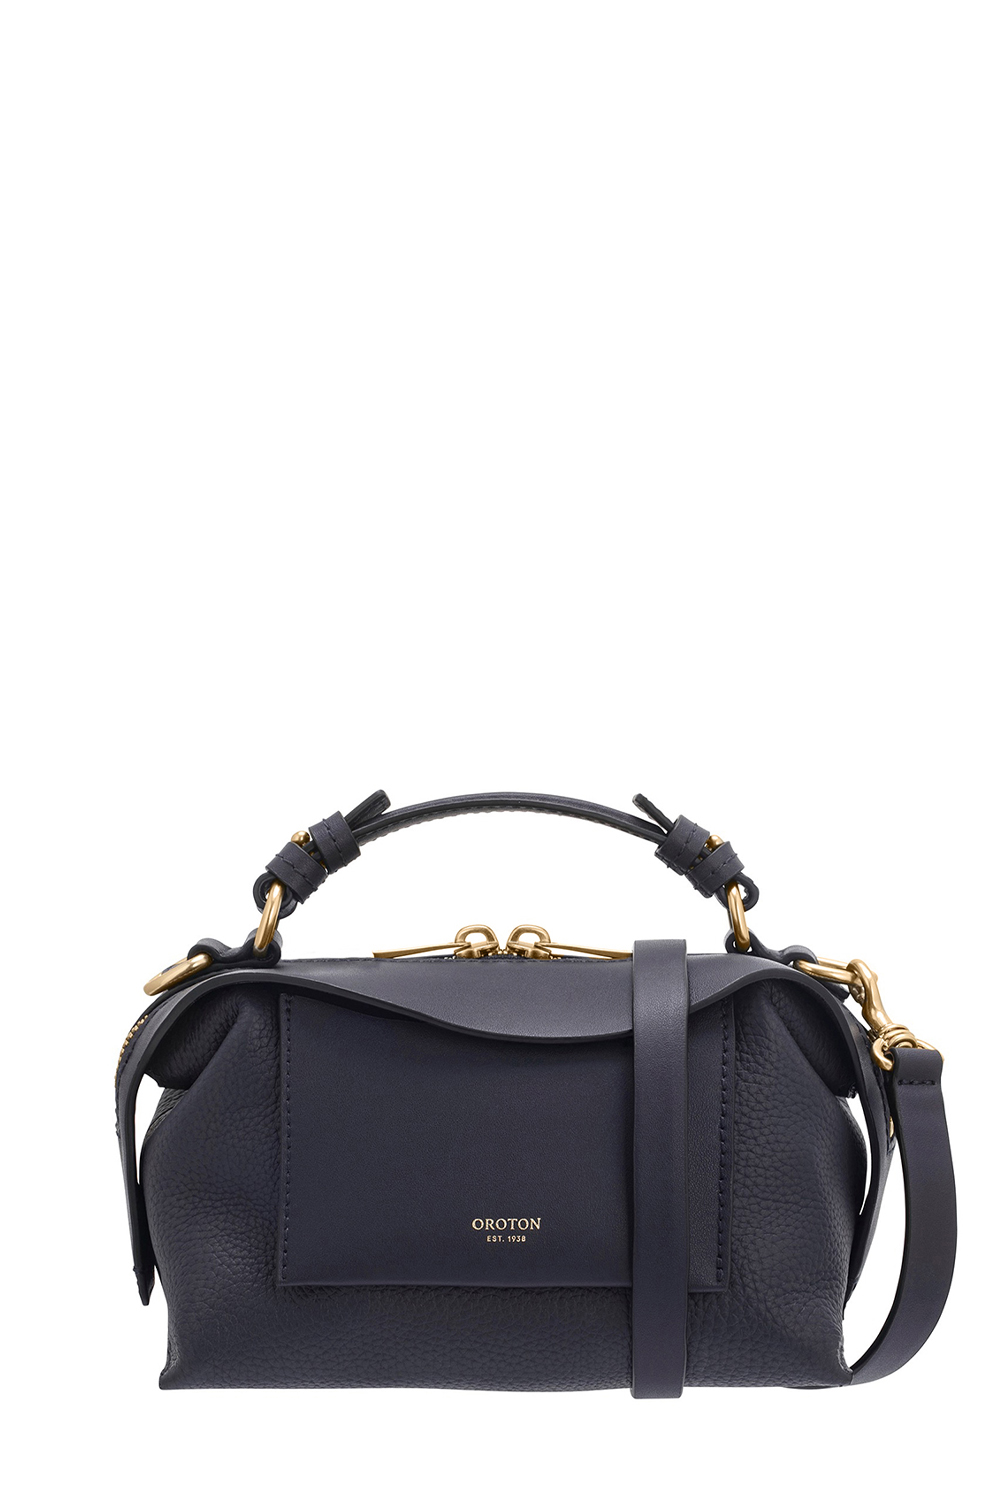 OROTON Essential Gather Tote Handbag in Medium Size | eBay